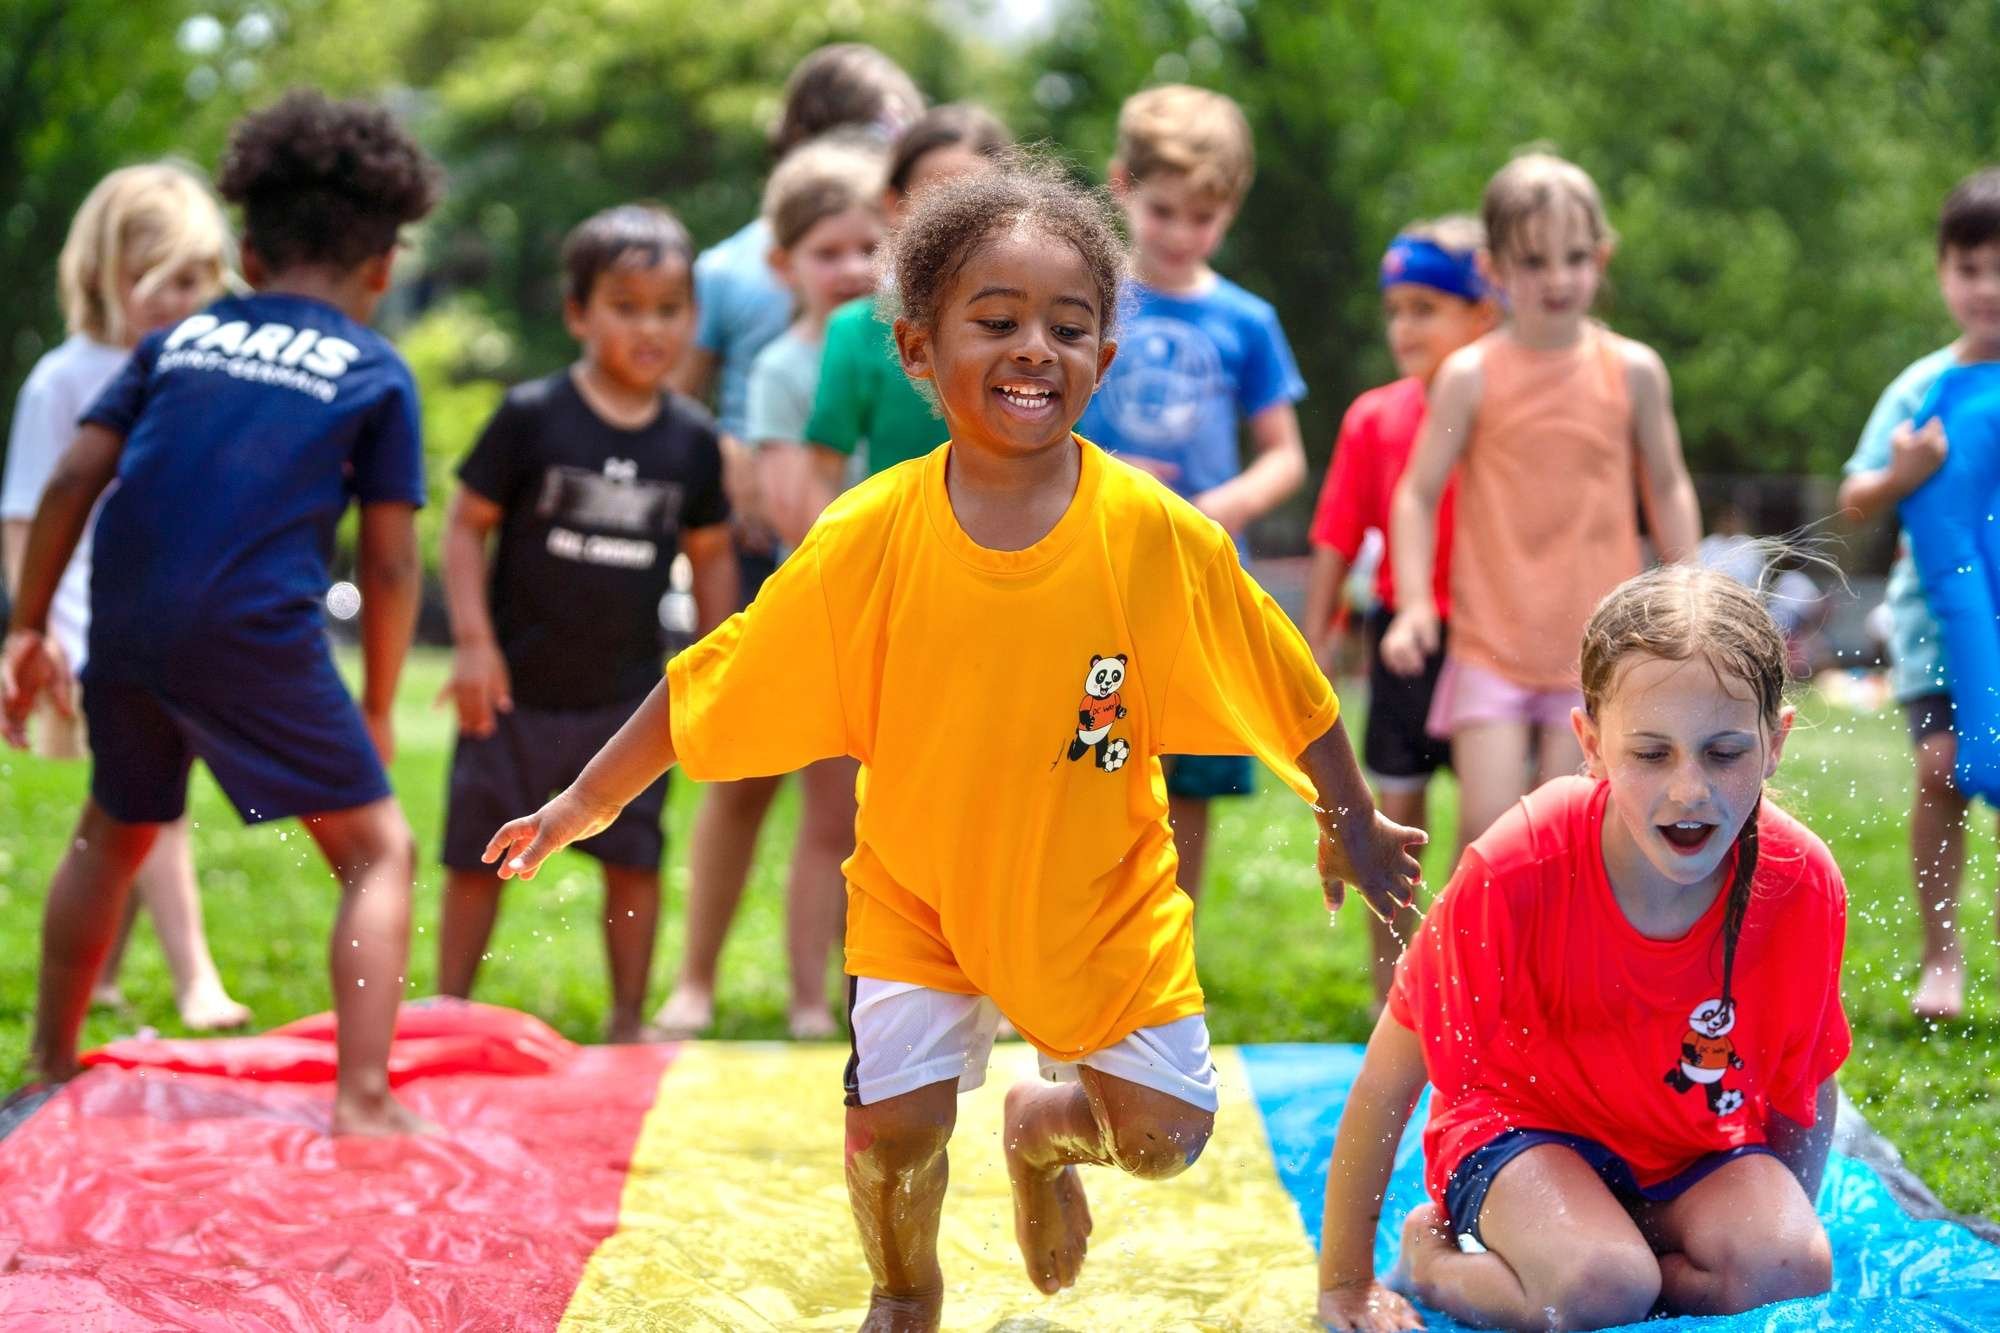 Dc-way-soccer-club-for-kids-in-washington-dc-summer-camp-at-tyler-elementary-school- 0103.jpg